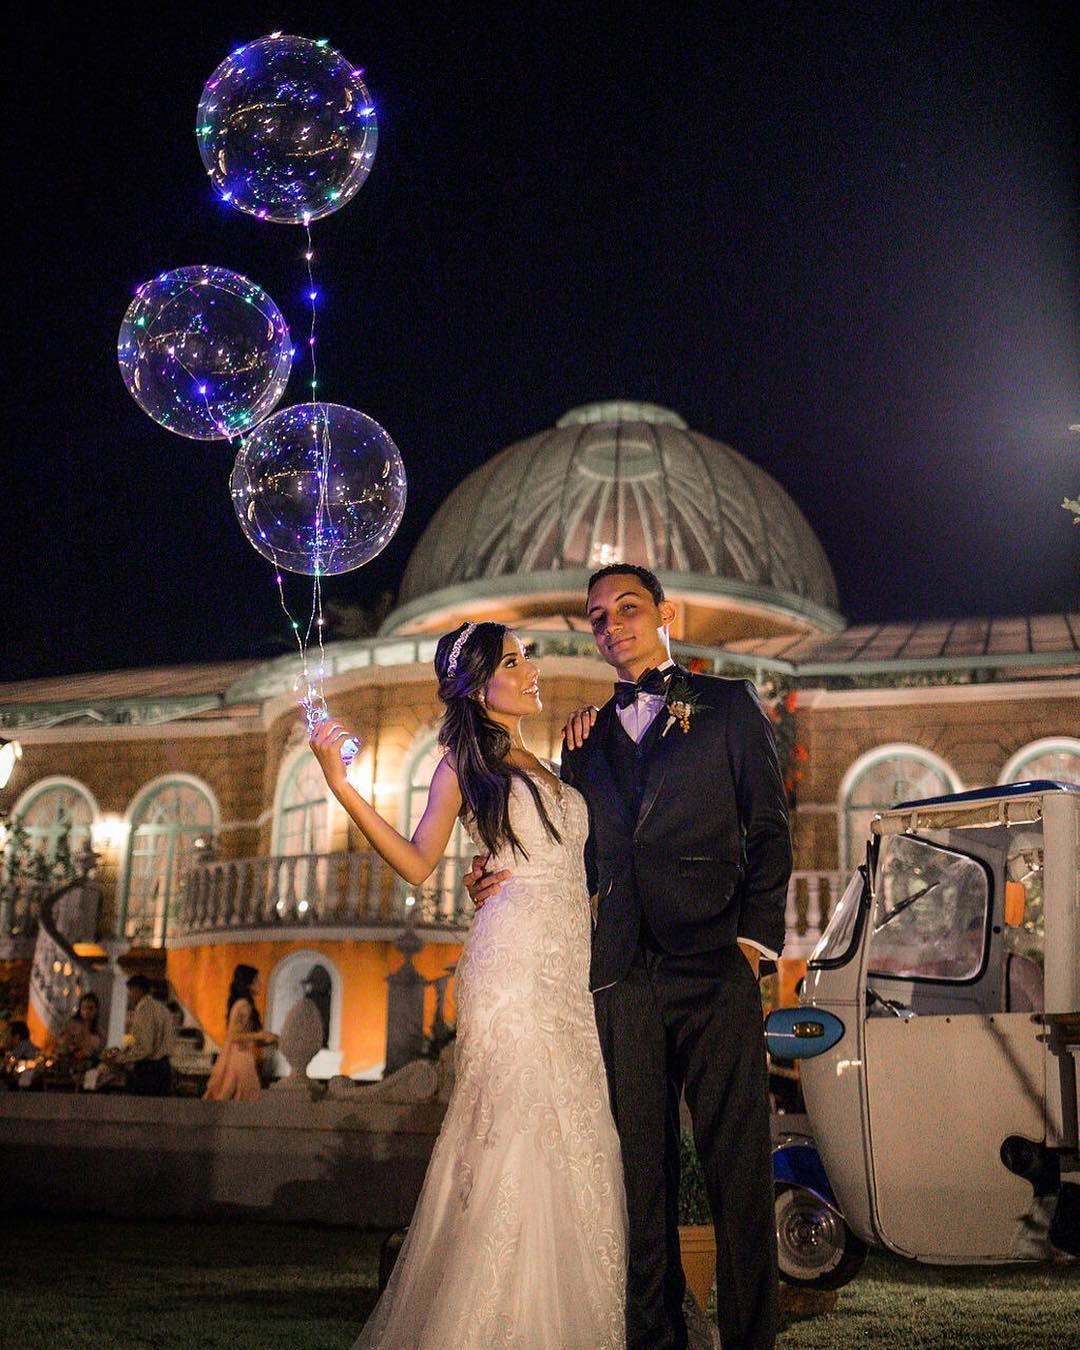 Wedding Bubble Balloons Home Party Décor - Decotree.co Online Shop